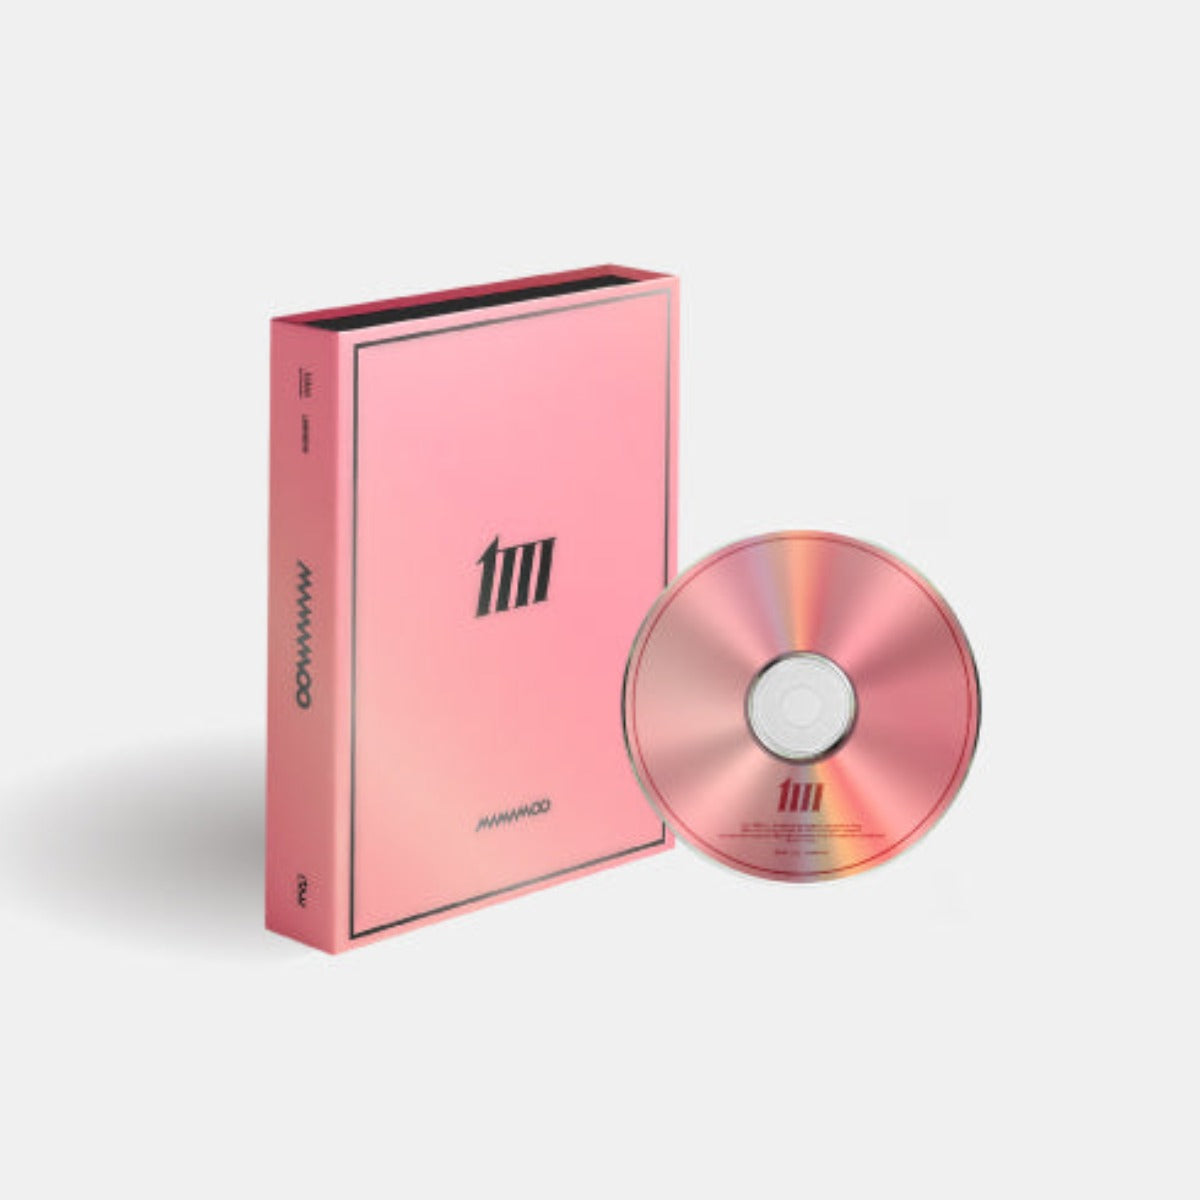 Mamamoo Mini Album Vol. 12 - MIC ON